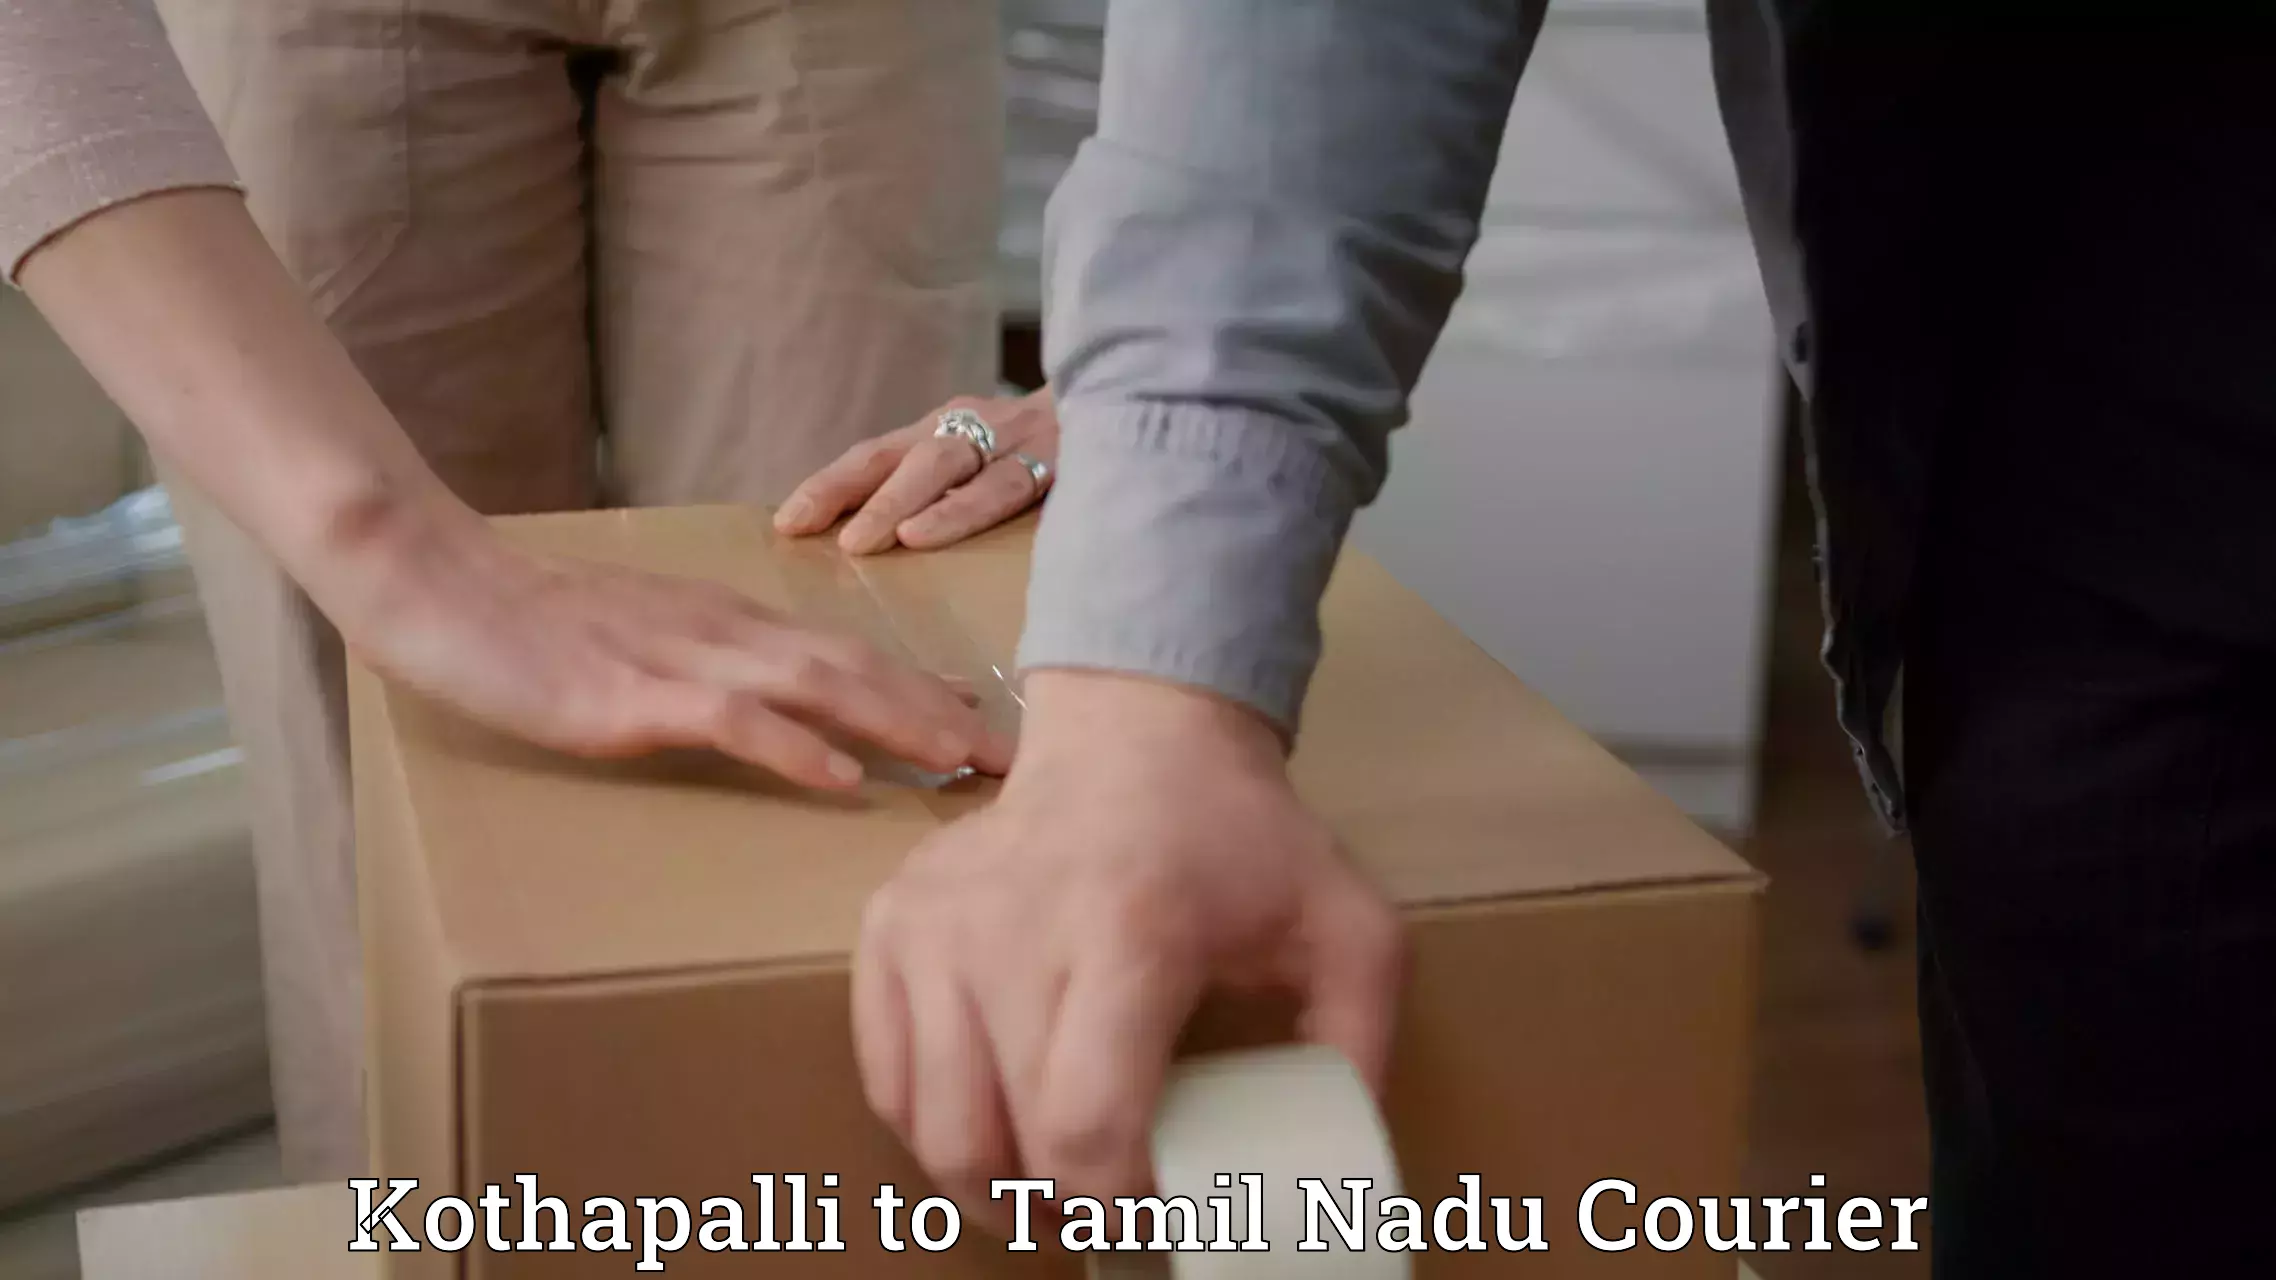 Quick dispatch service Kothapalli to Tamil Nadu